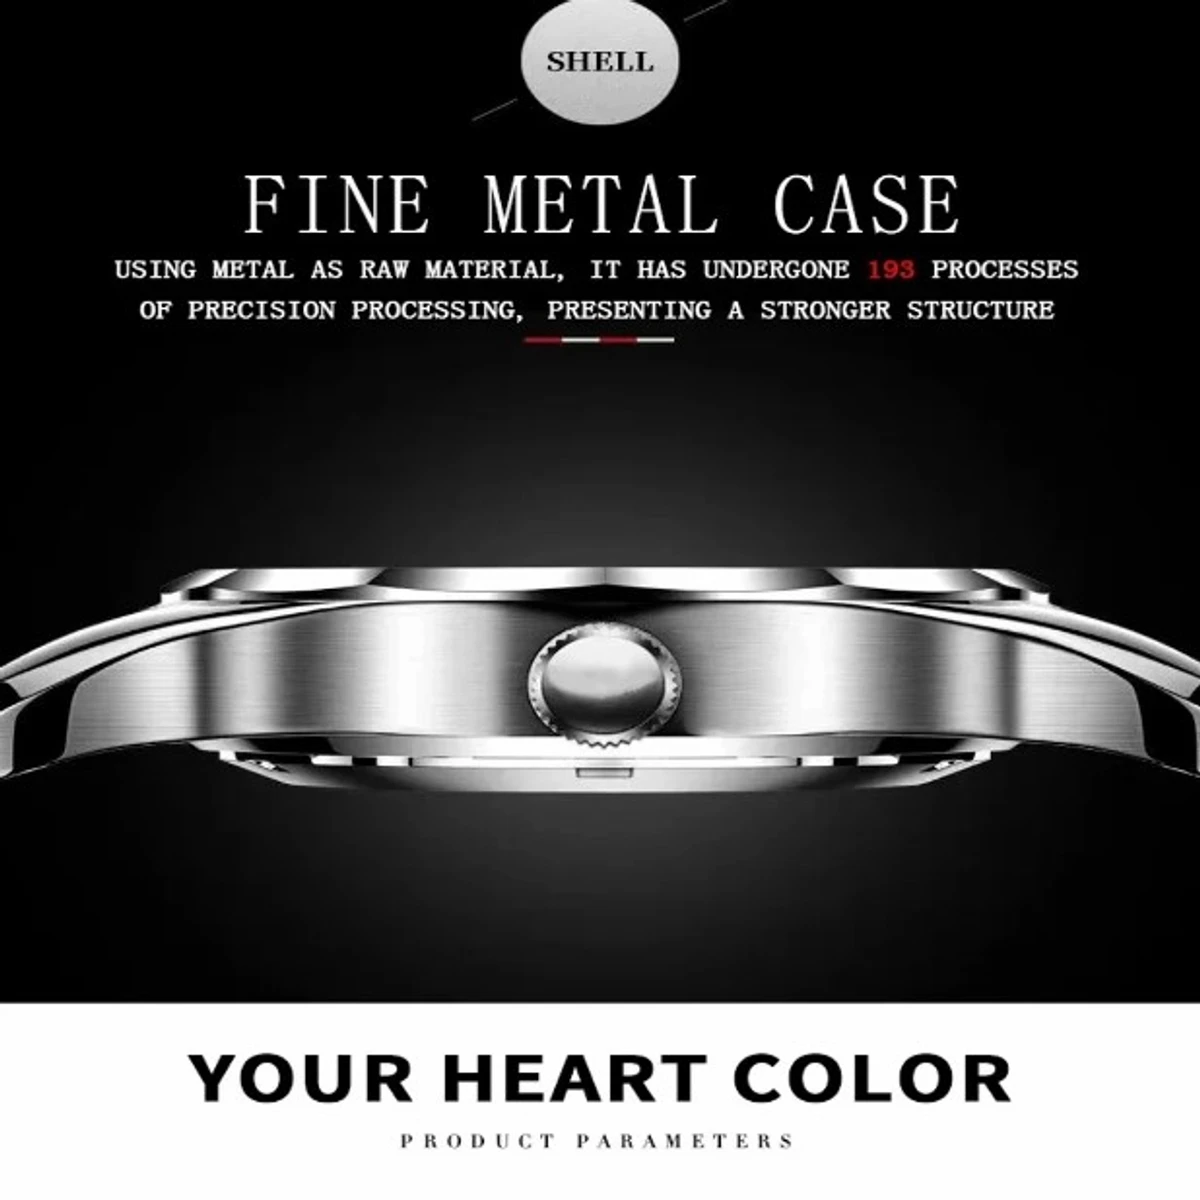 2023 New Luxury Binbond Brand Men's Luminous Watches Stainless Steel Waterproof Chronograph watch - Black